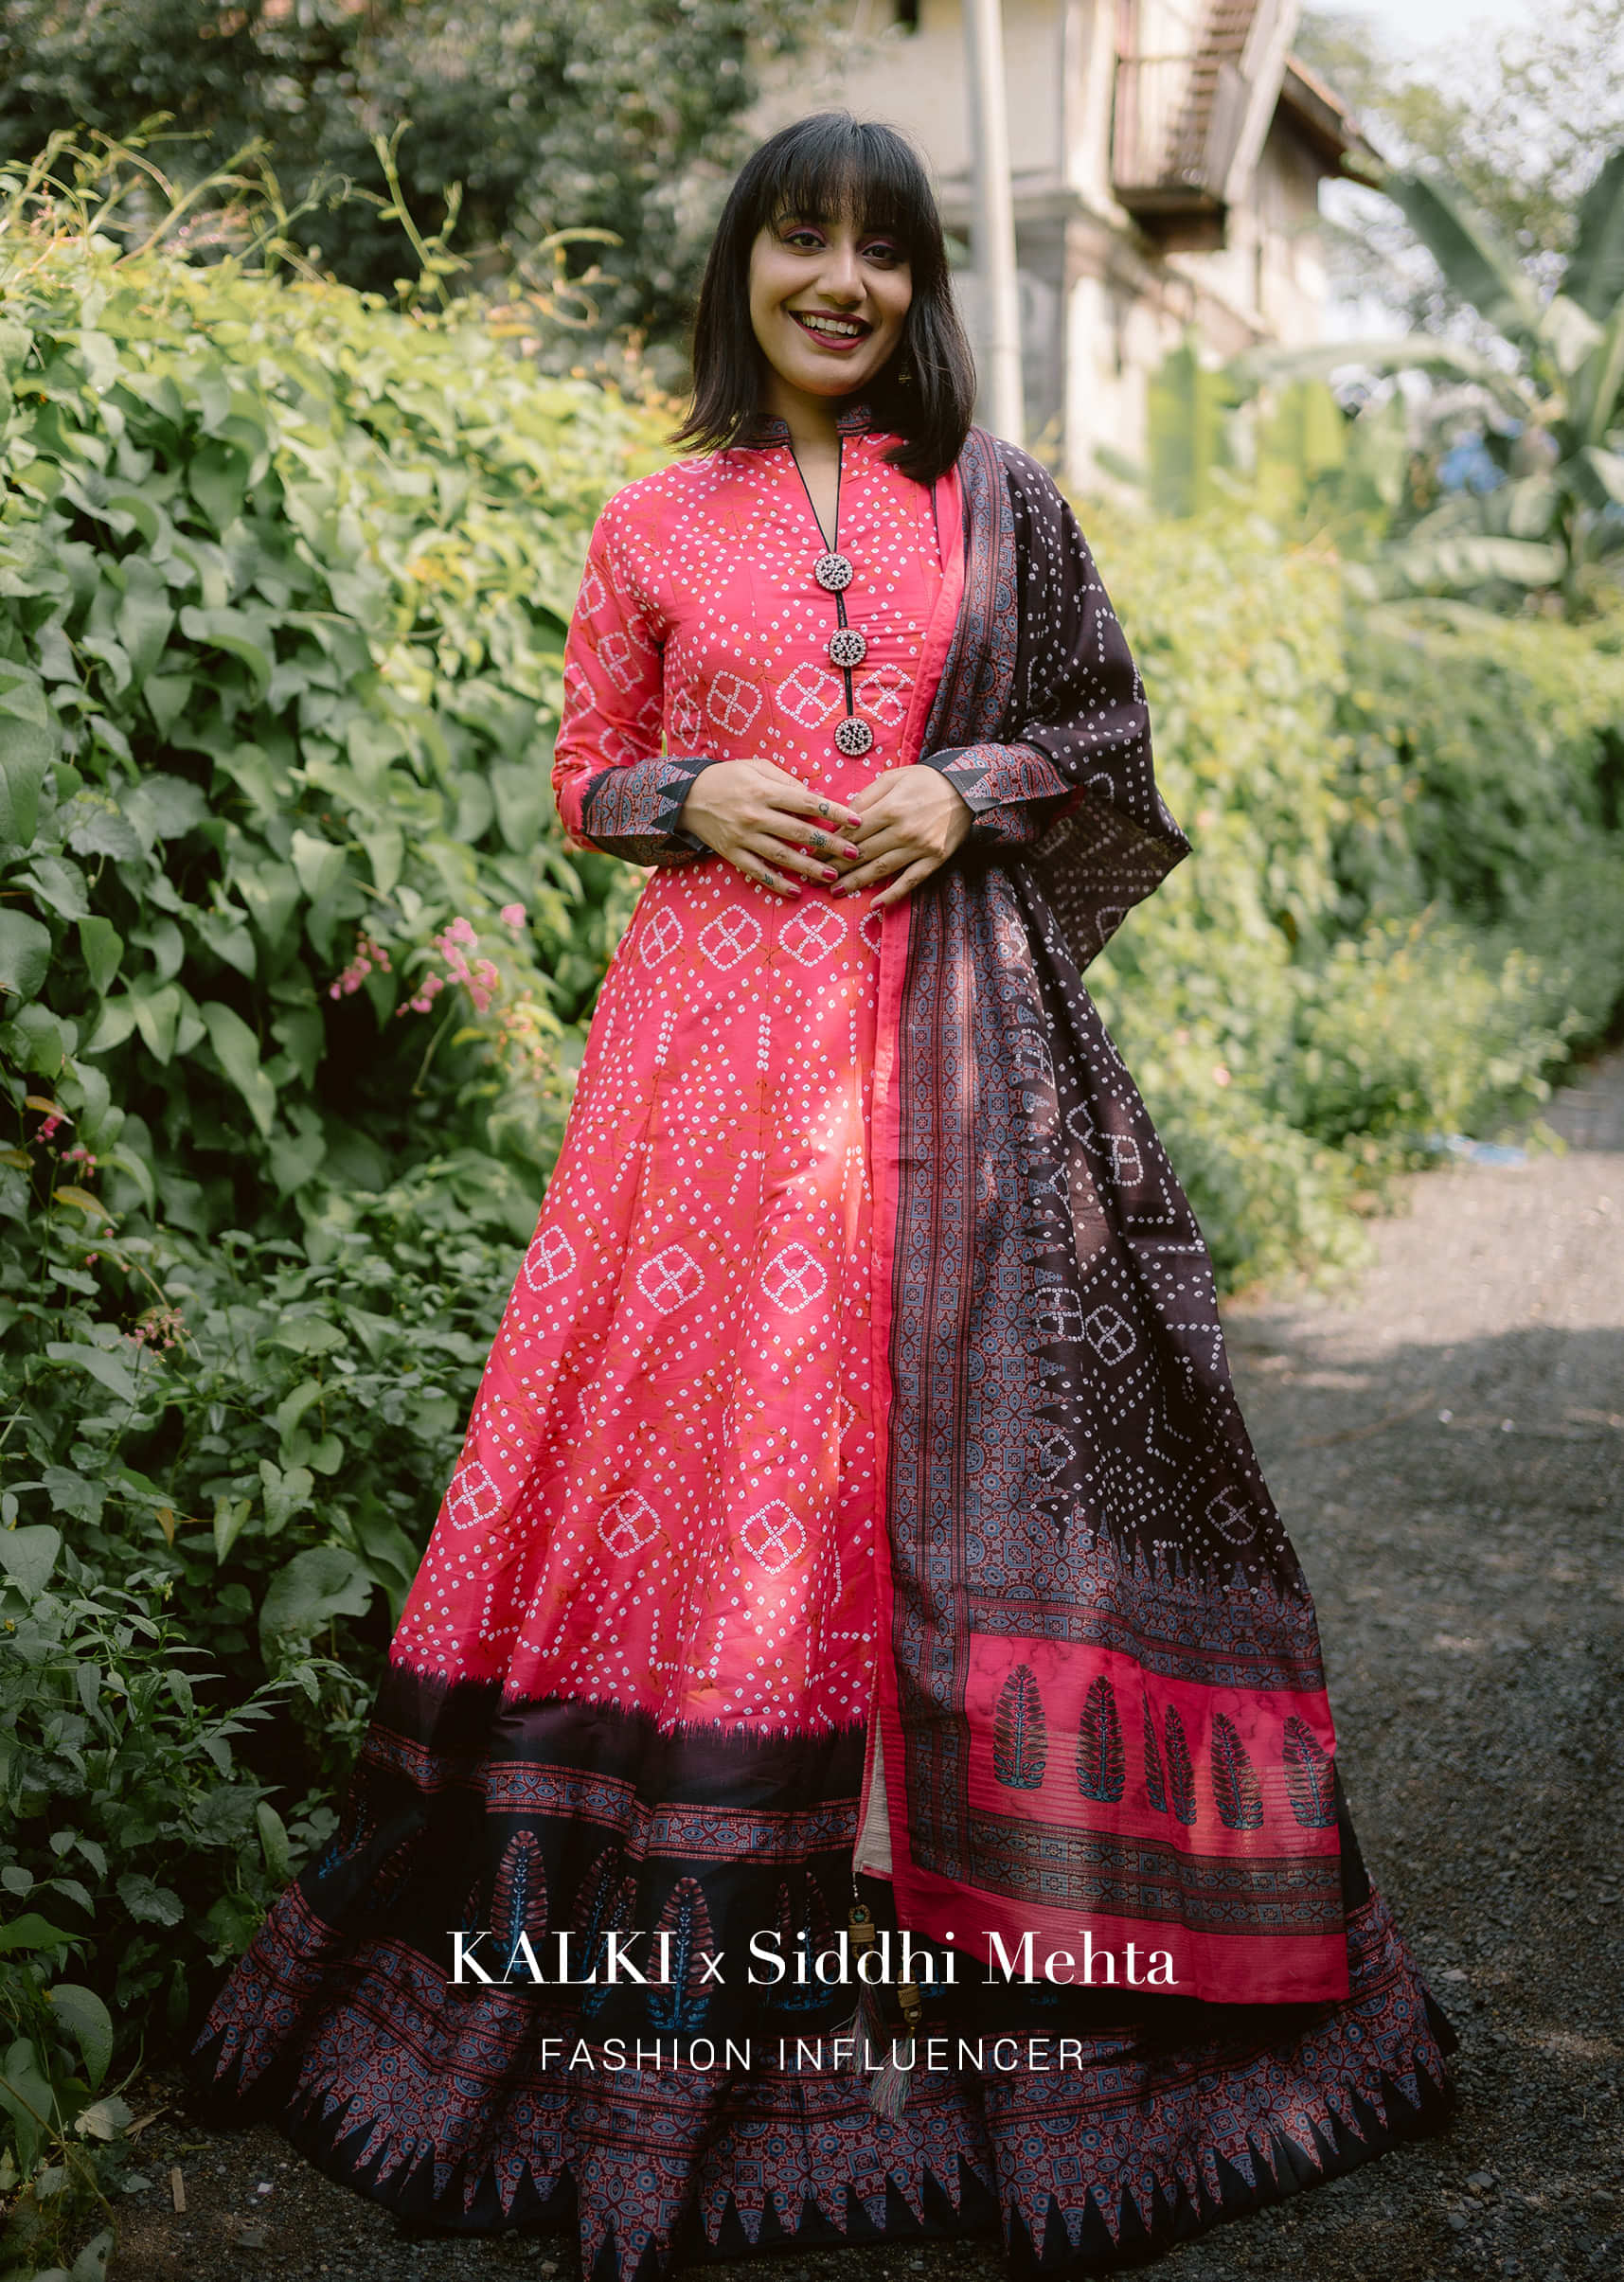 Hot Pink Silk Anarkali Suit With Contrasting Maroon Block Printed Border and Bandhani Design